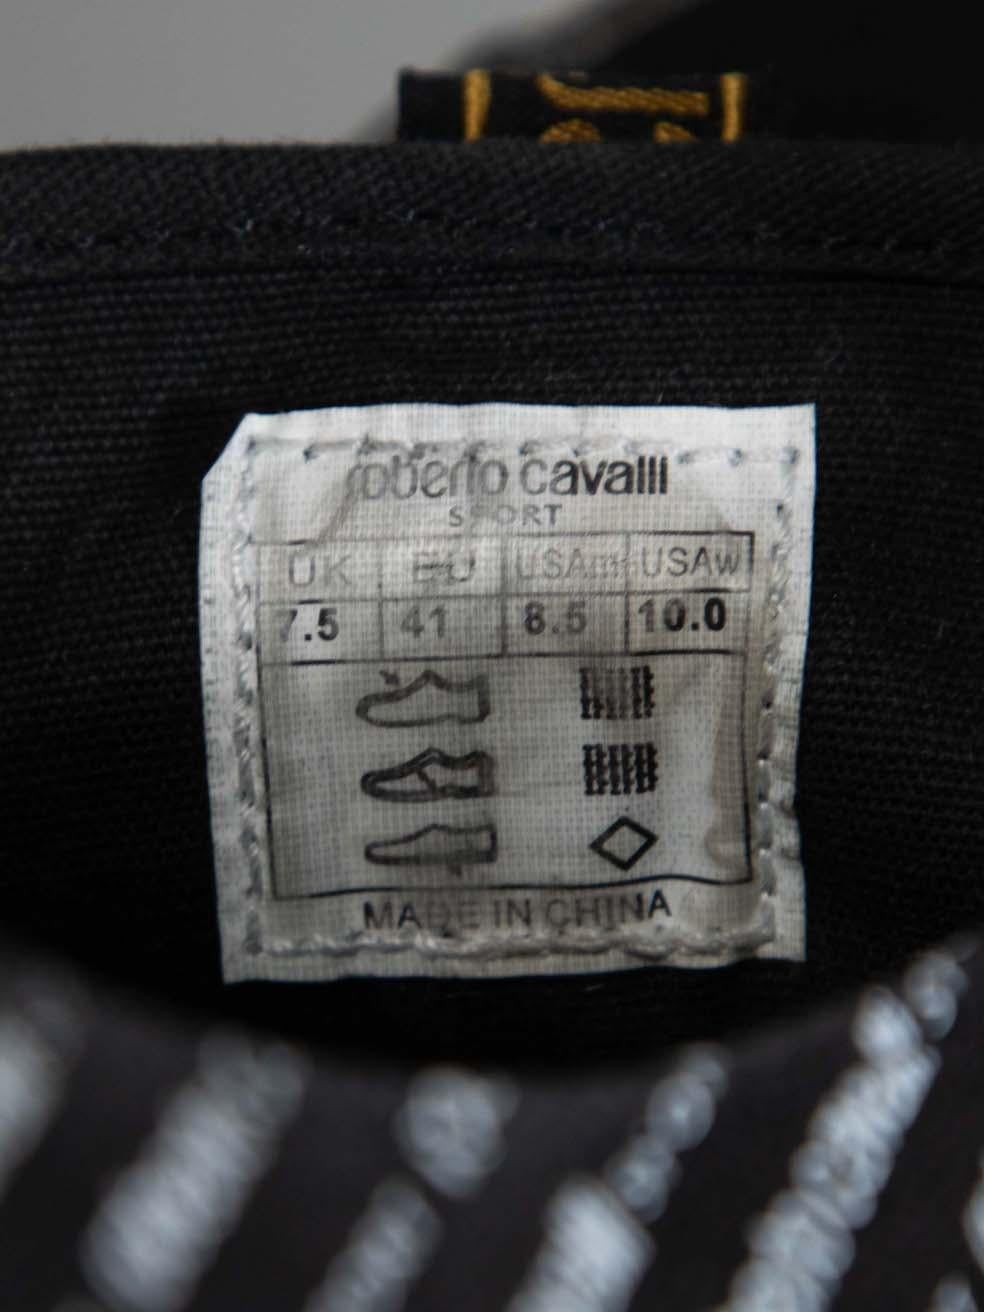 Roberto Cavalli Black Logo Print Trainers Size UK 7.5 For Sale 3